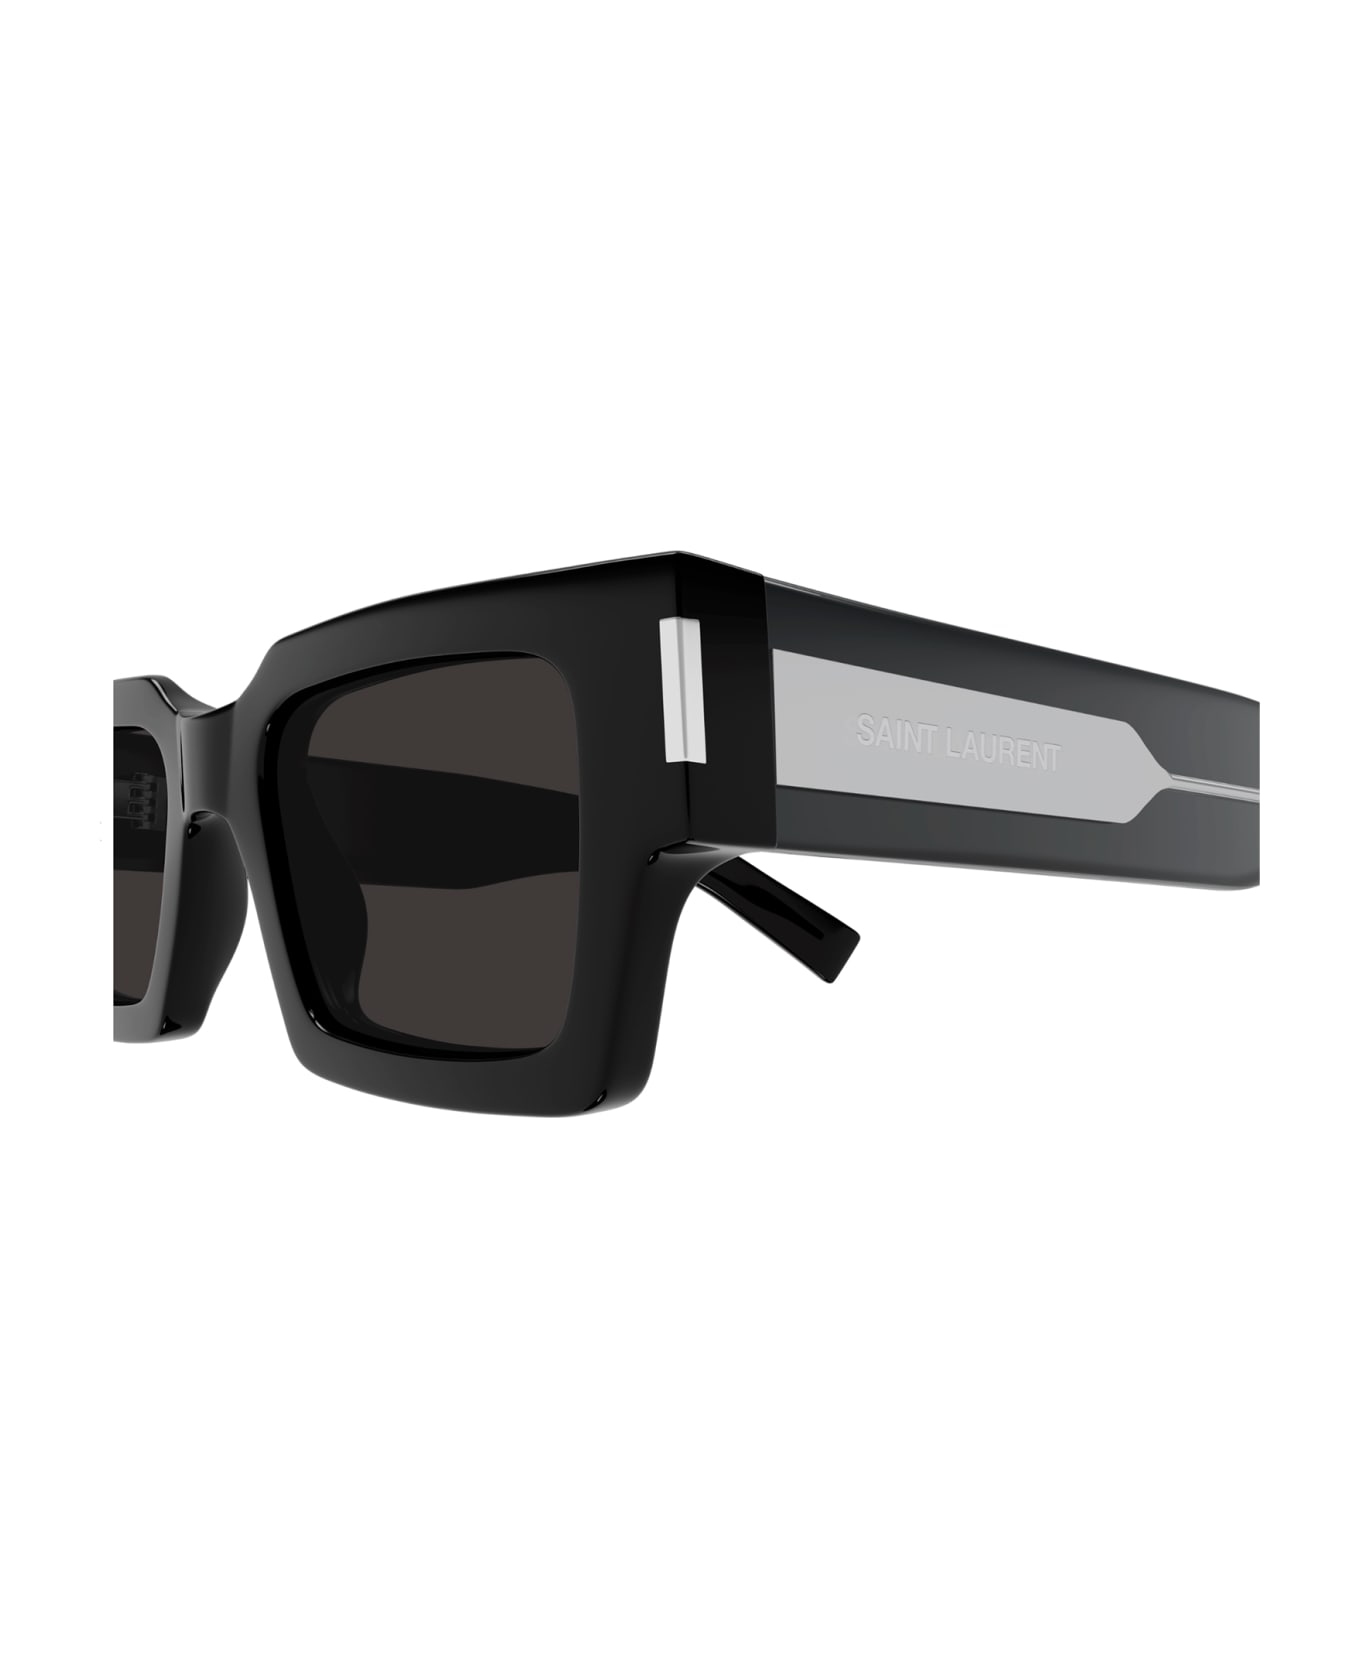 Saint Laurent Eyewear SL 572 Sunglasses - Black Crystal Grey